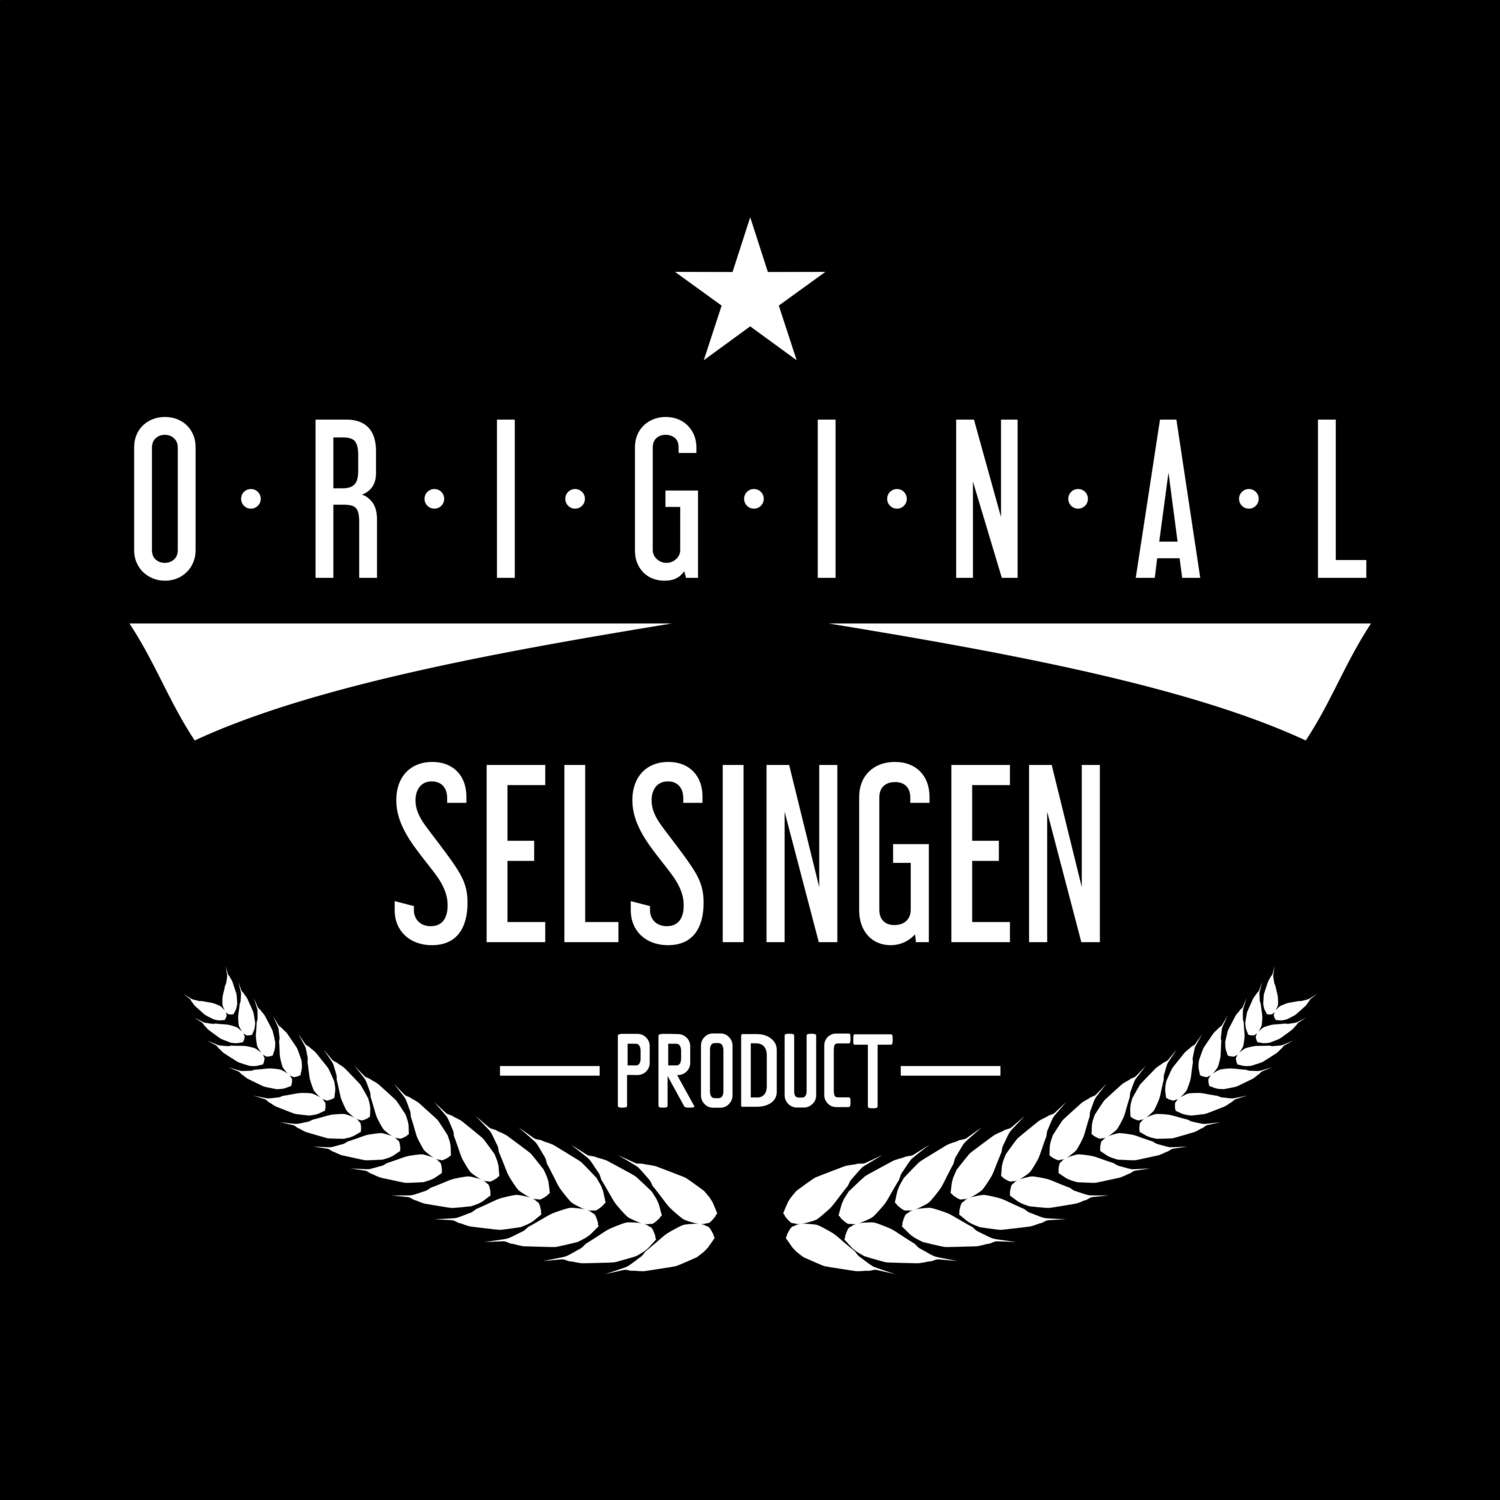 Selsingen T-Shirt »Original Product«